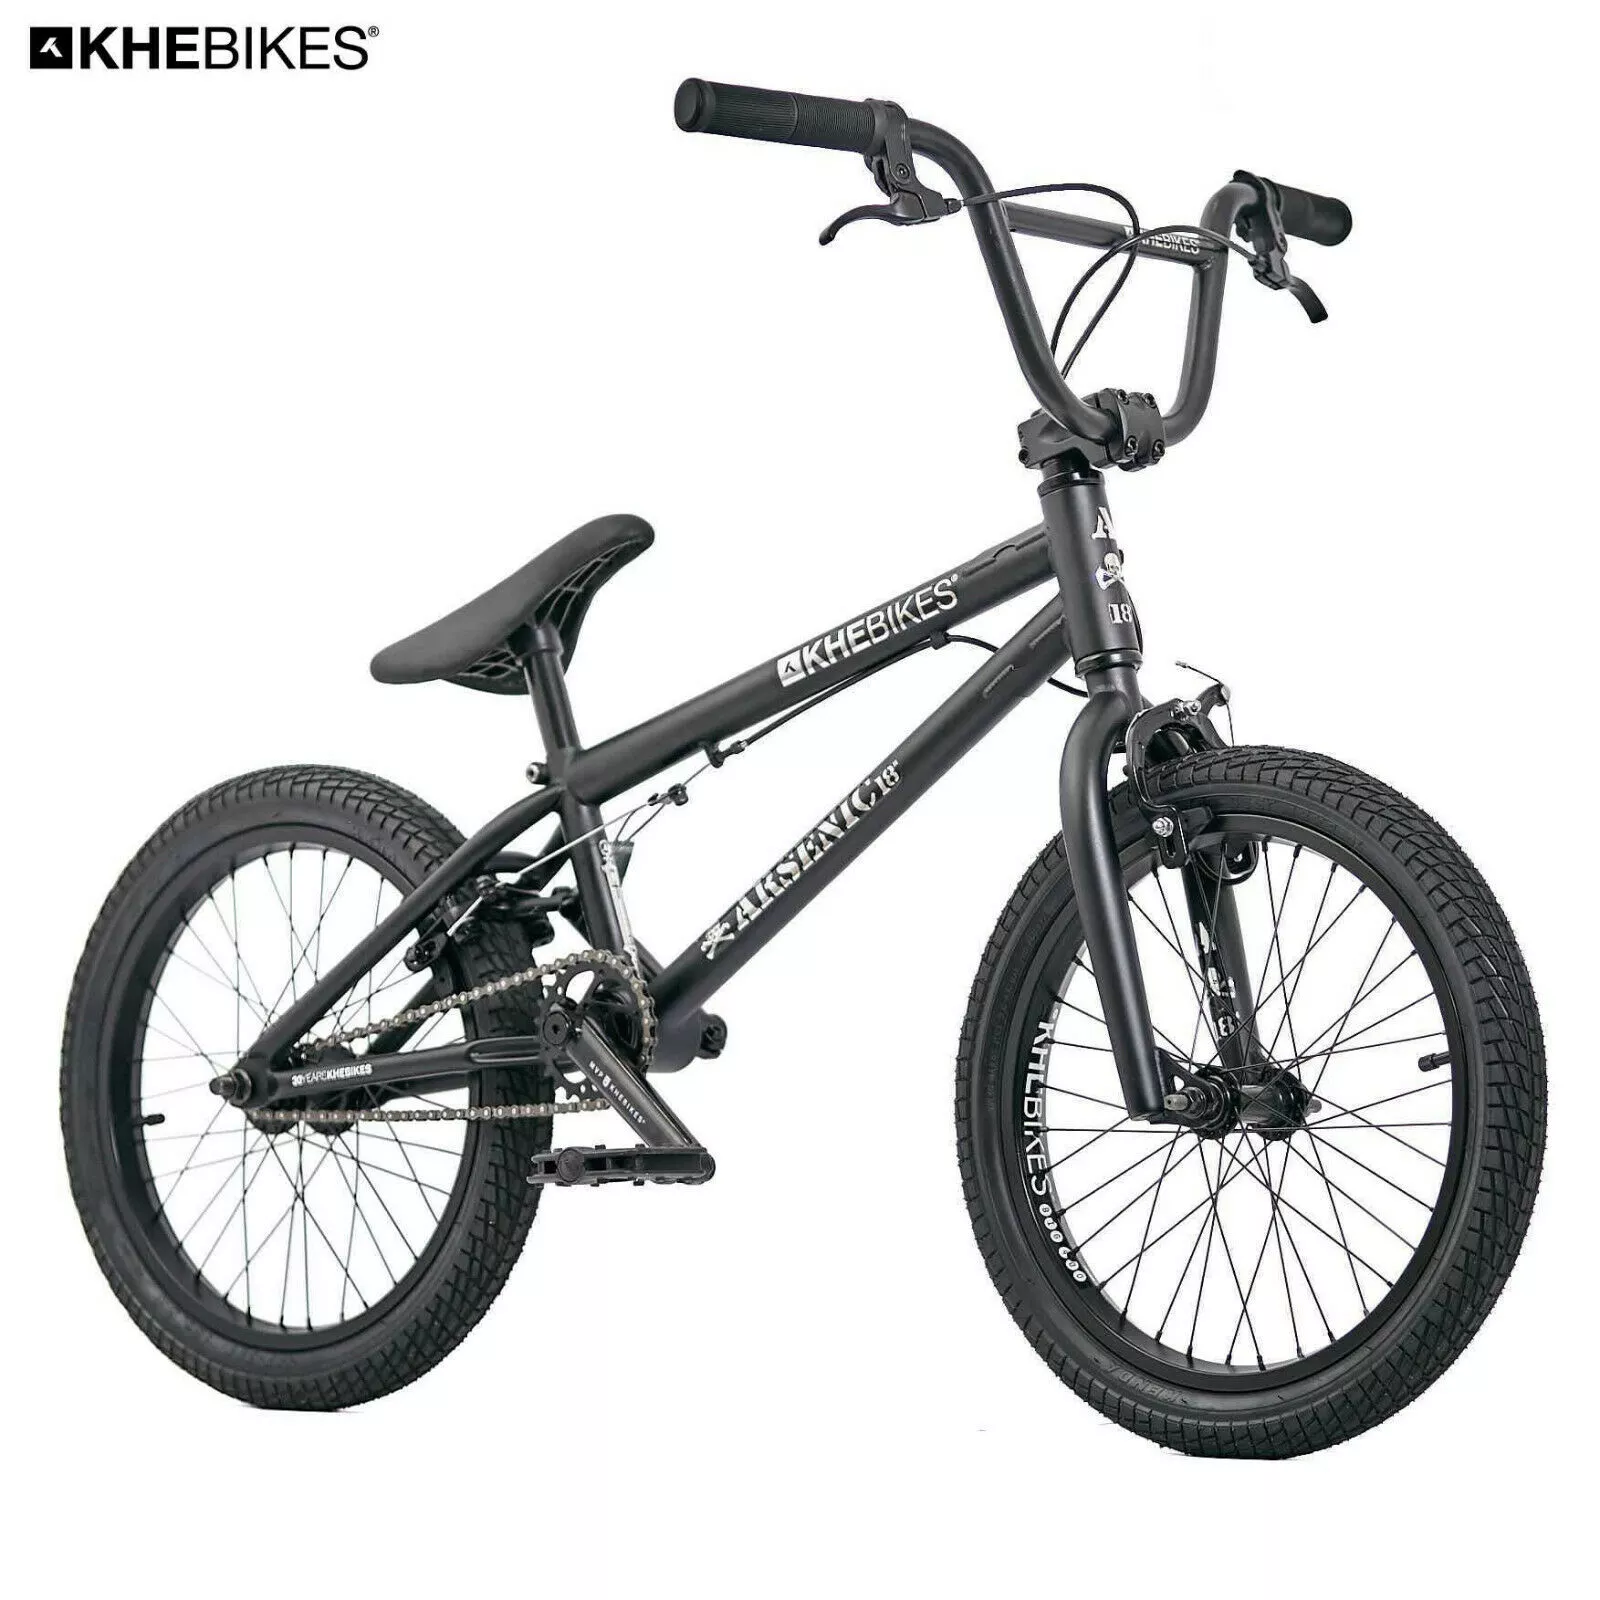 Outlet N1: BMX bike KHE ARSENIC 18 inch 22.3lbs